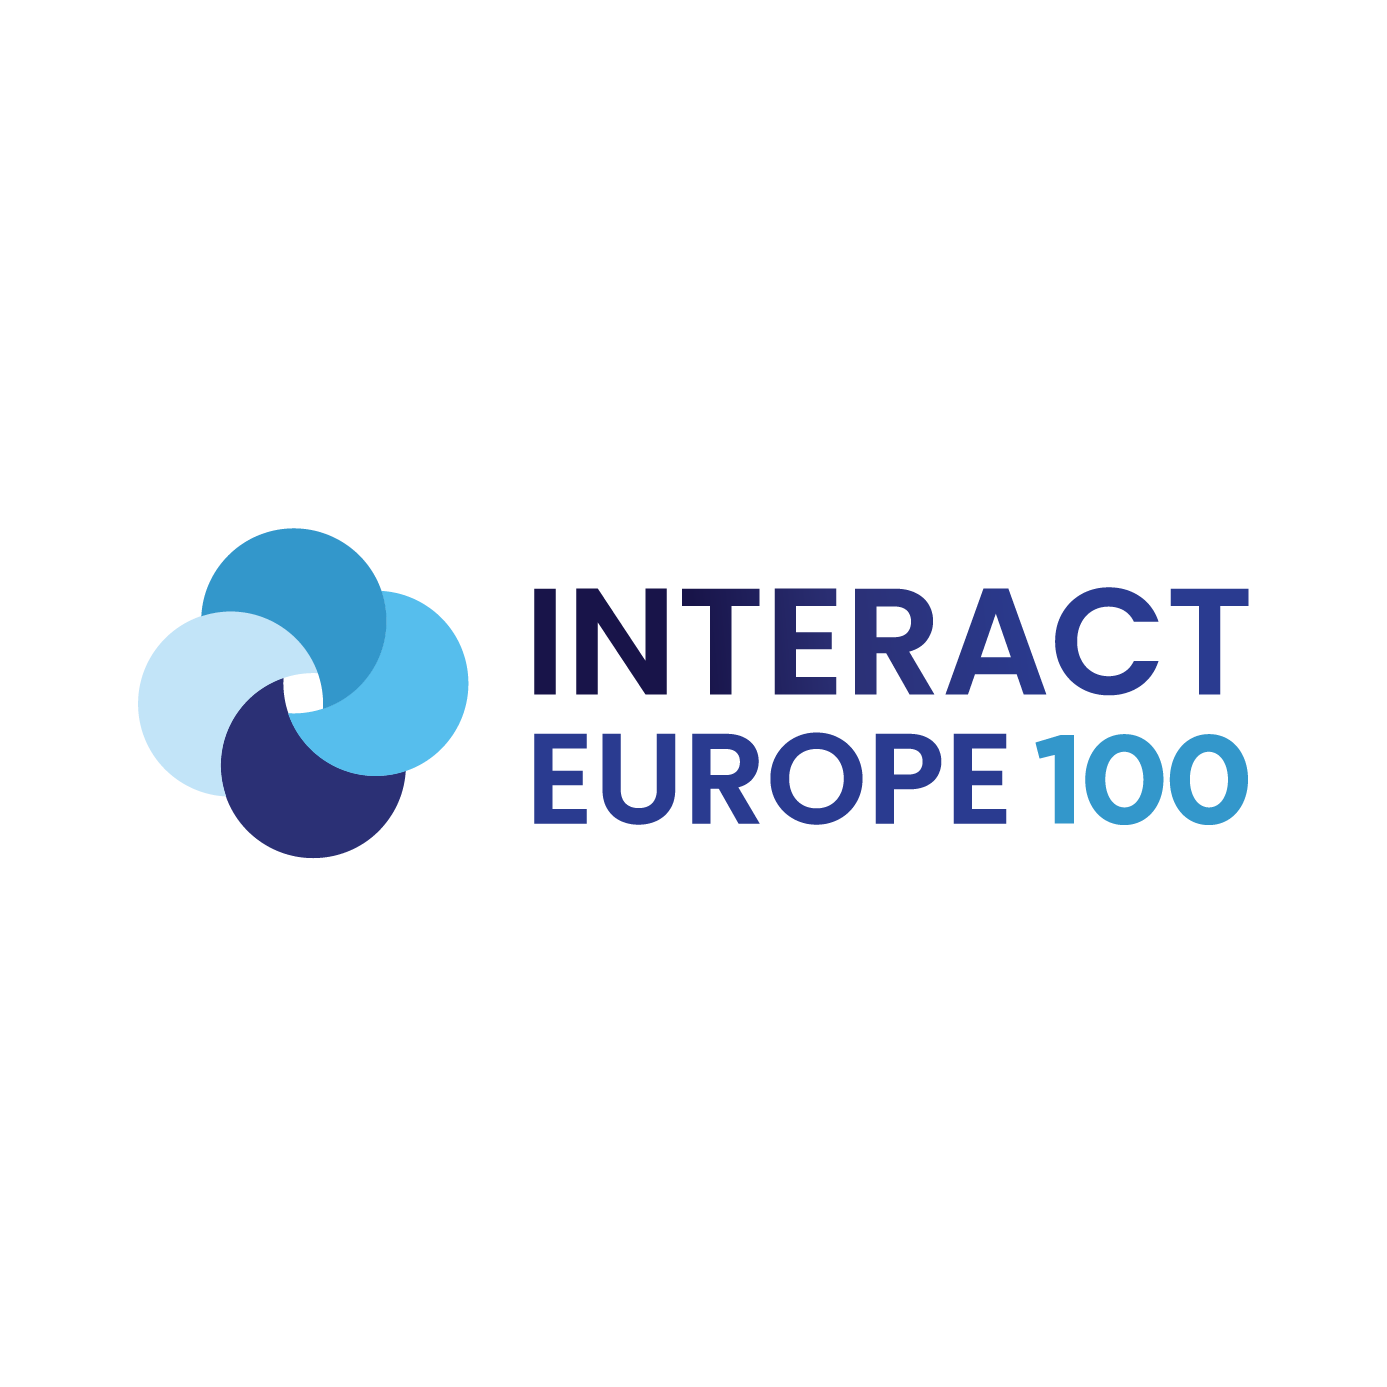 eco interact europe100 long rectangle